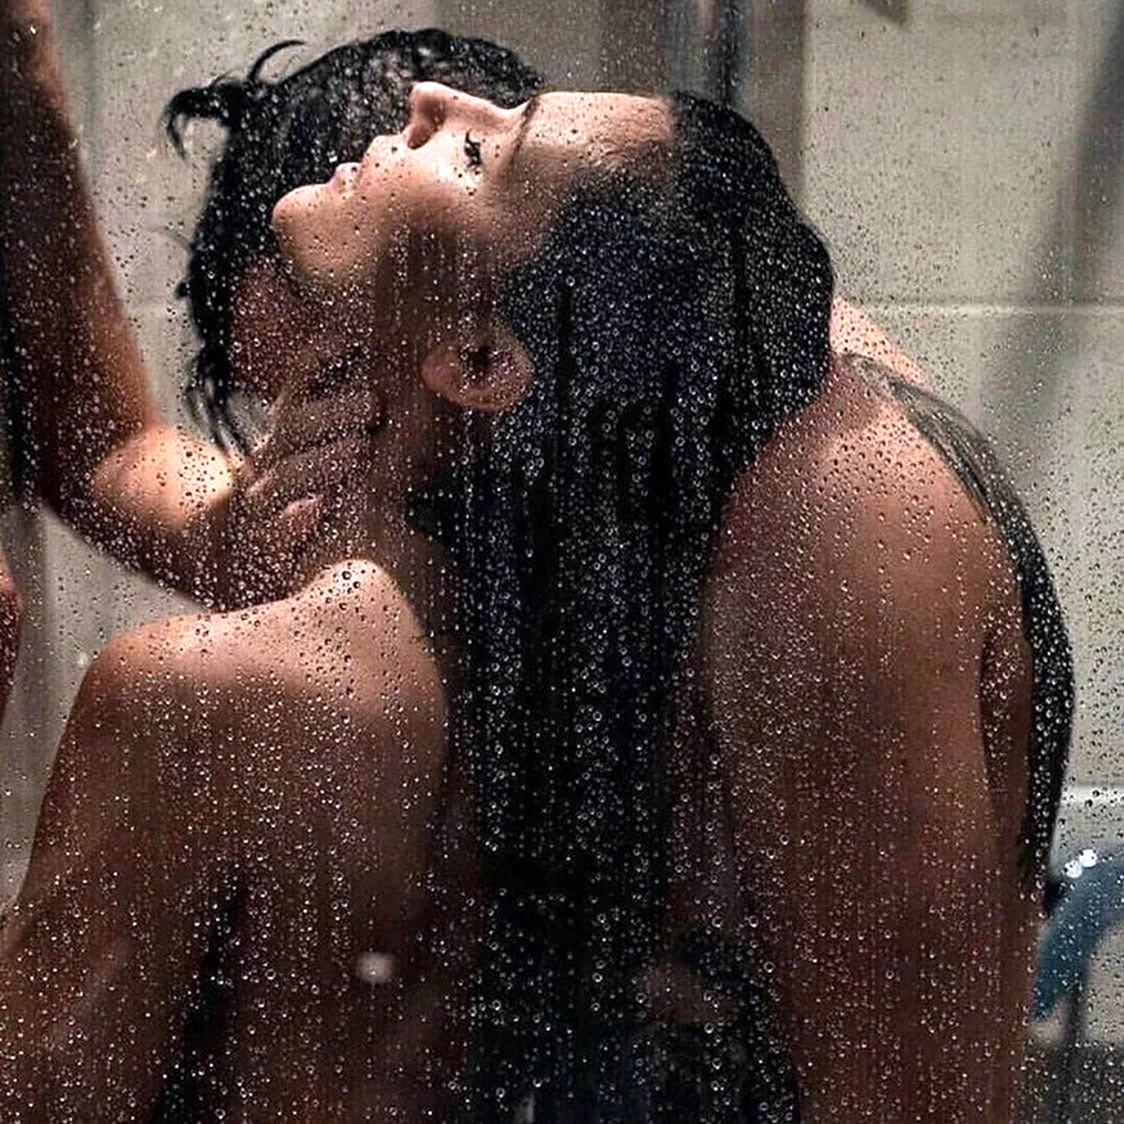 Мужчина и женщина под душем